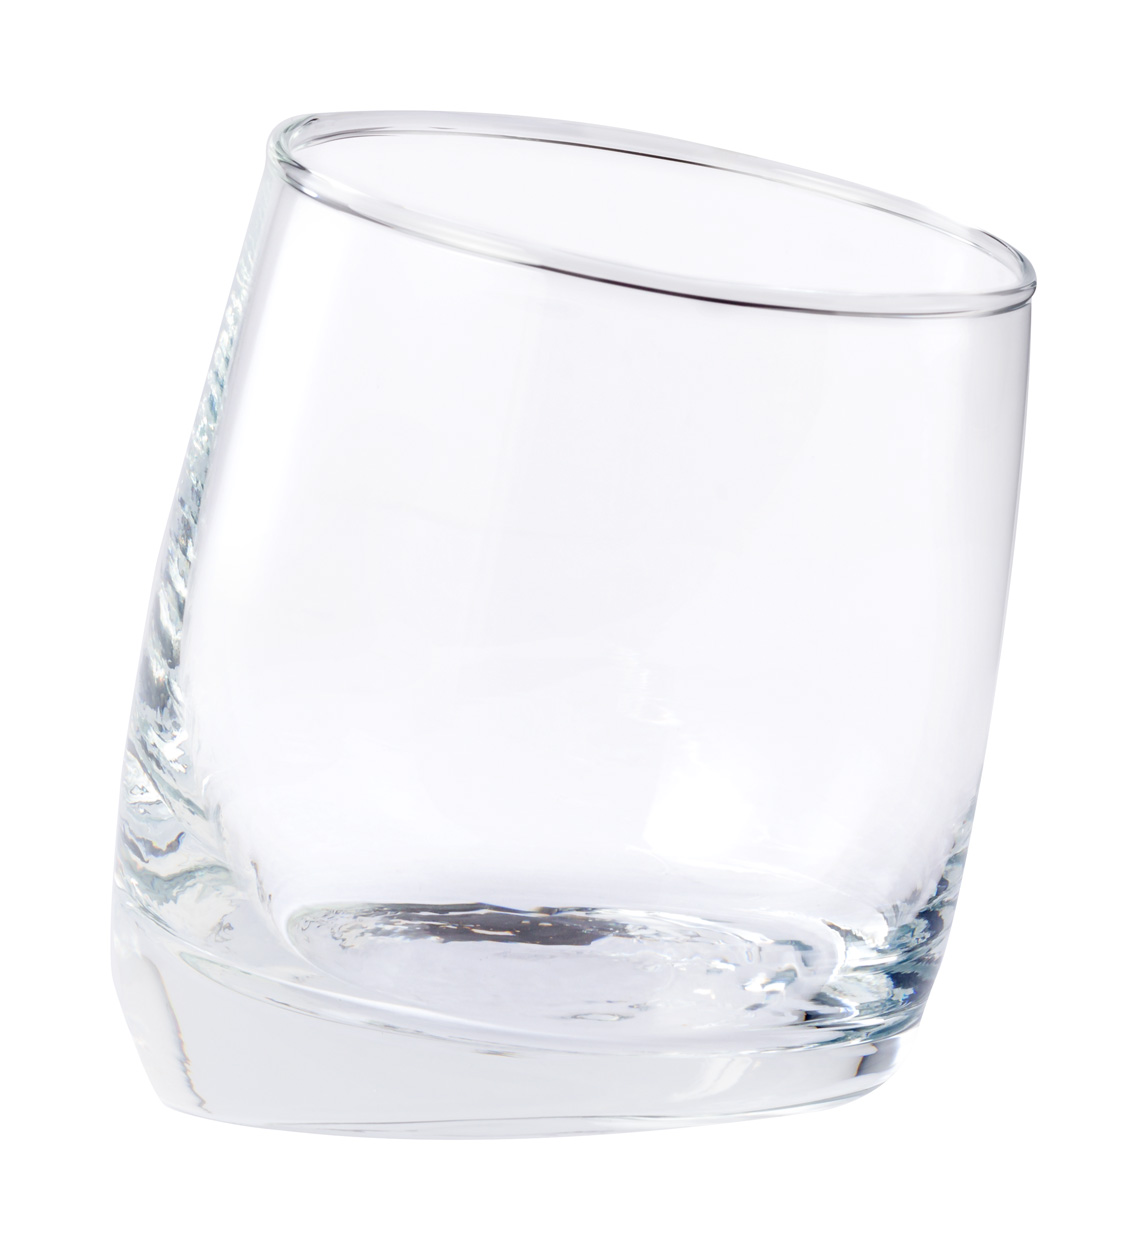 Merzex whiskey glass - transparent